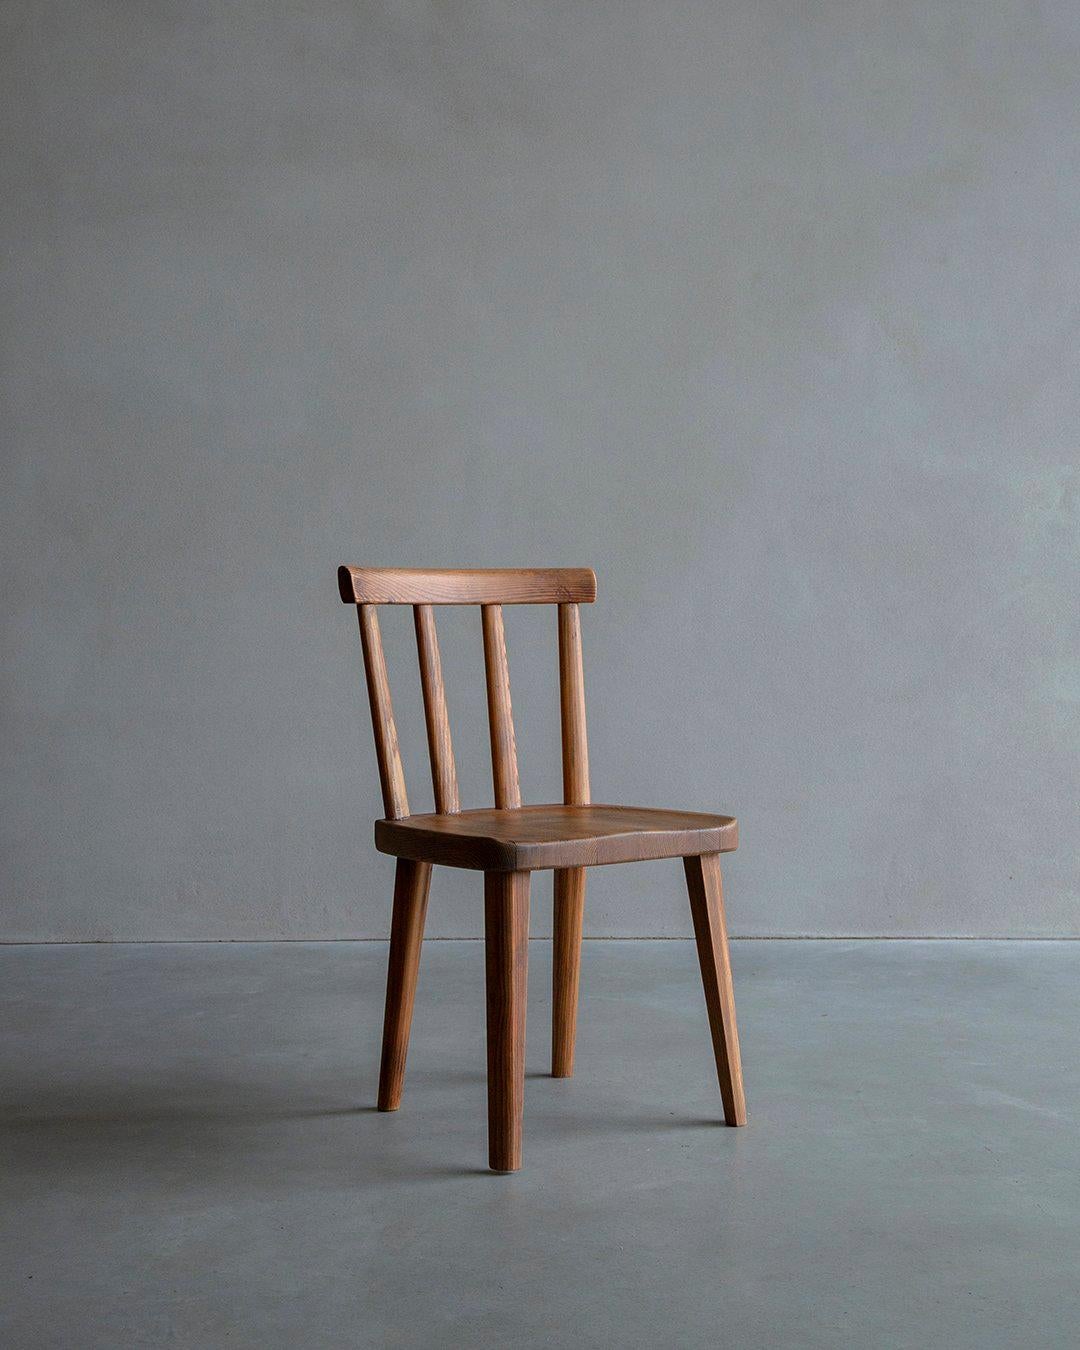 Scandinave moderne Axel Einar Hjorth - Utö Dining Chair - produit par Nordiska Kompaniet en Suède en vente